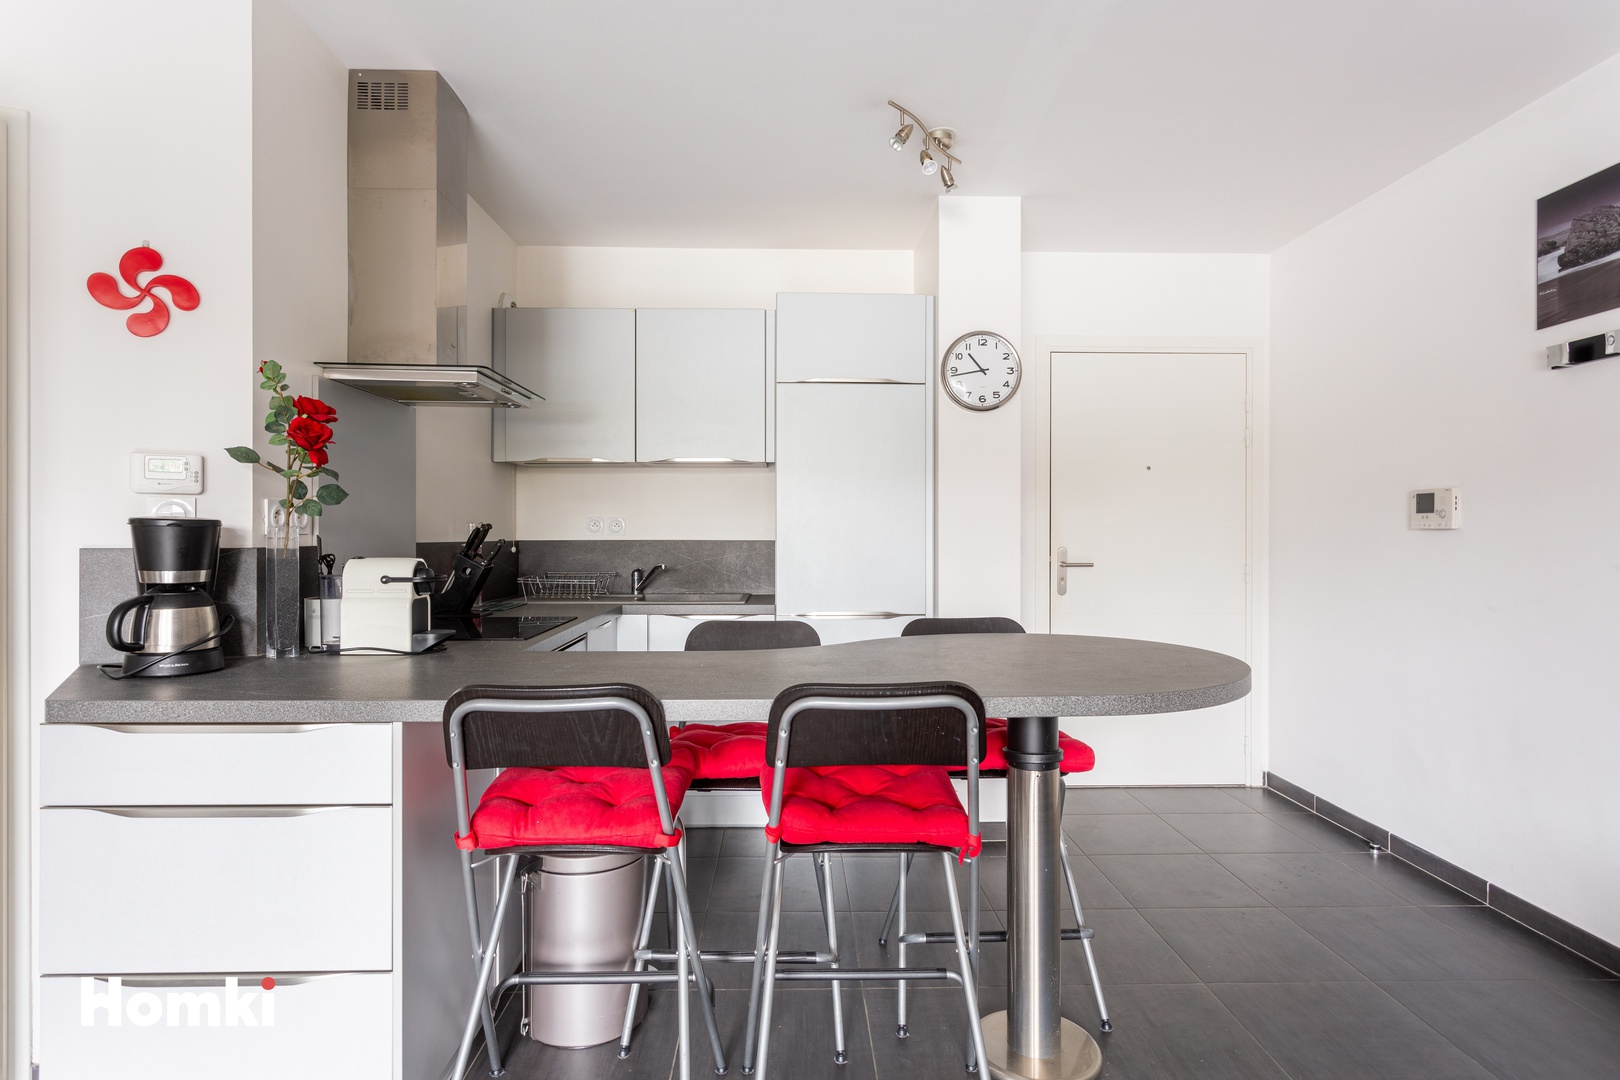 Homki - Vente Appartement  de 38.0 m² à Bidart 64210